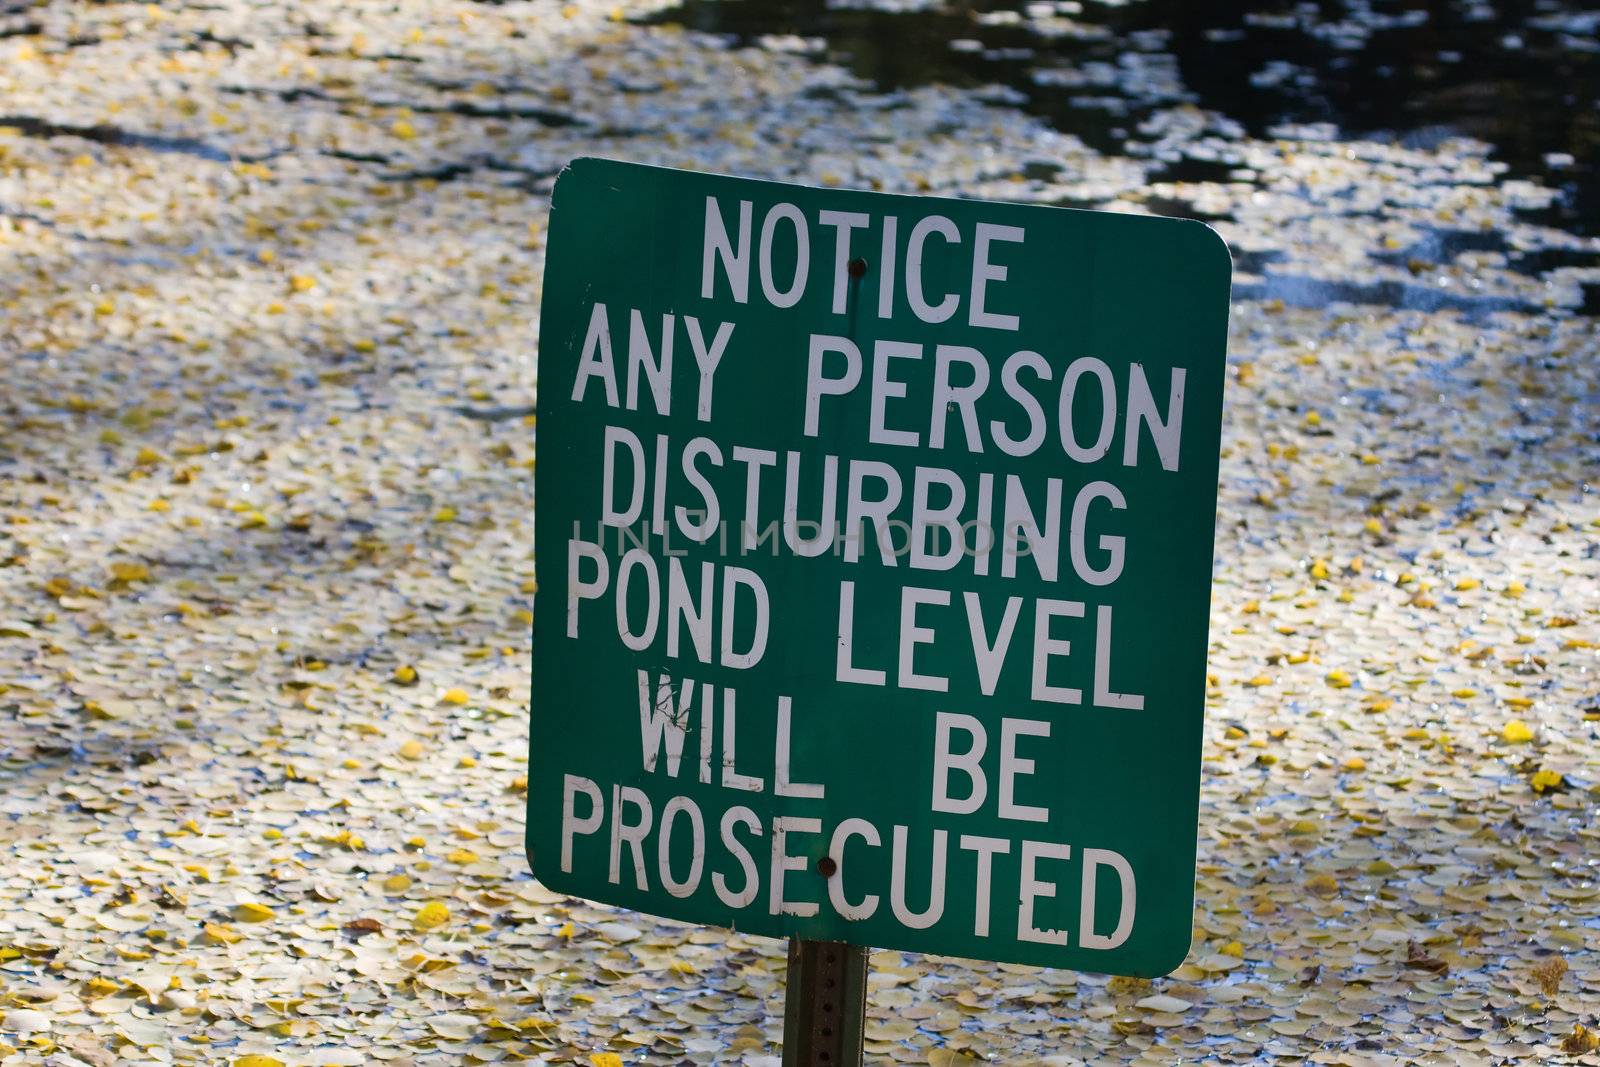 Do not disturb pond level warning sign.